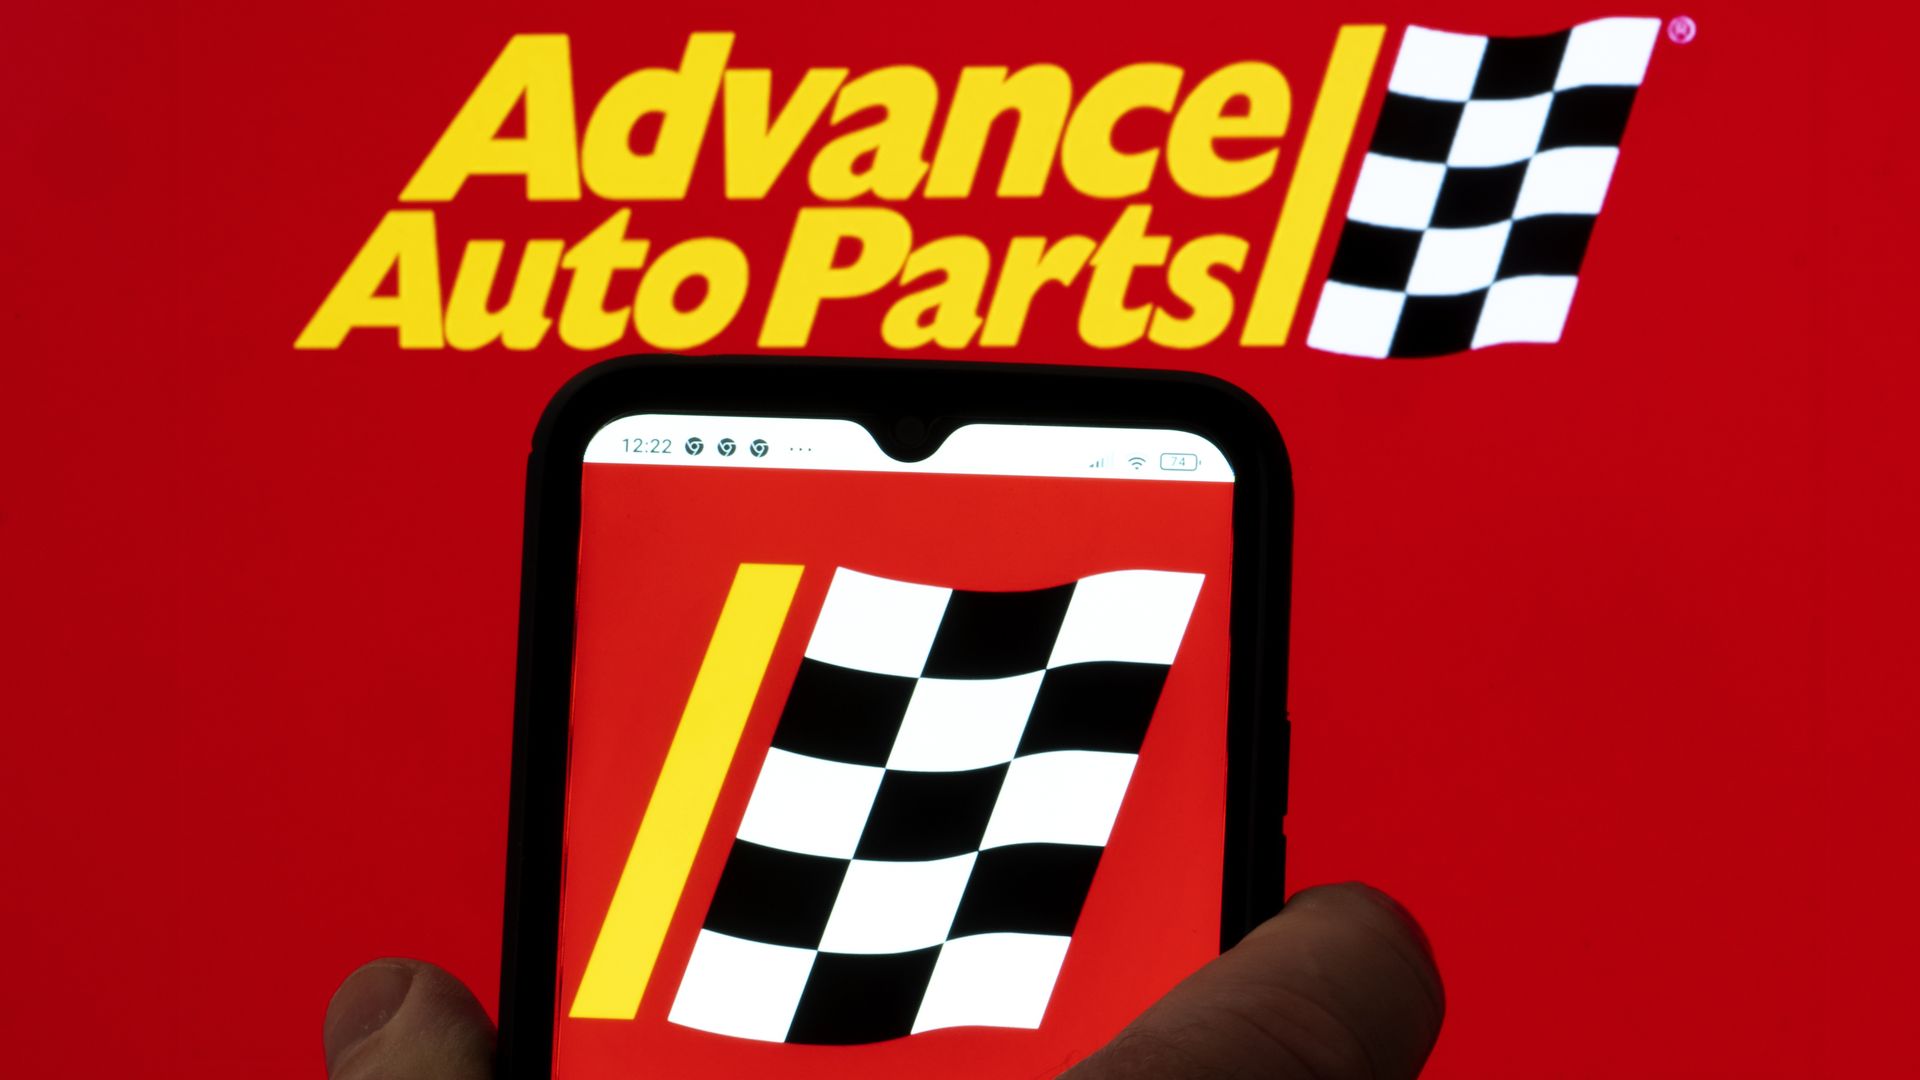 The Advance Auto Parts logo. 